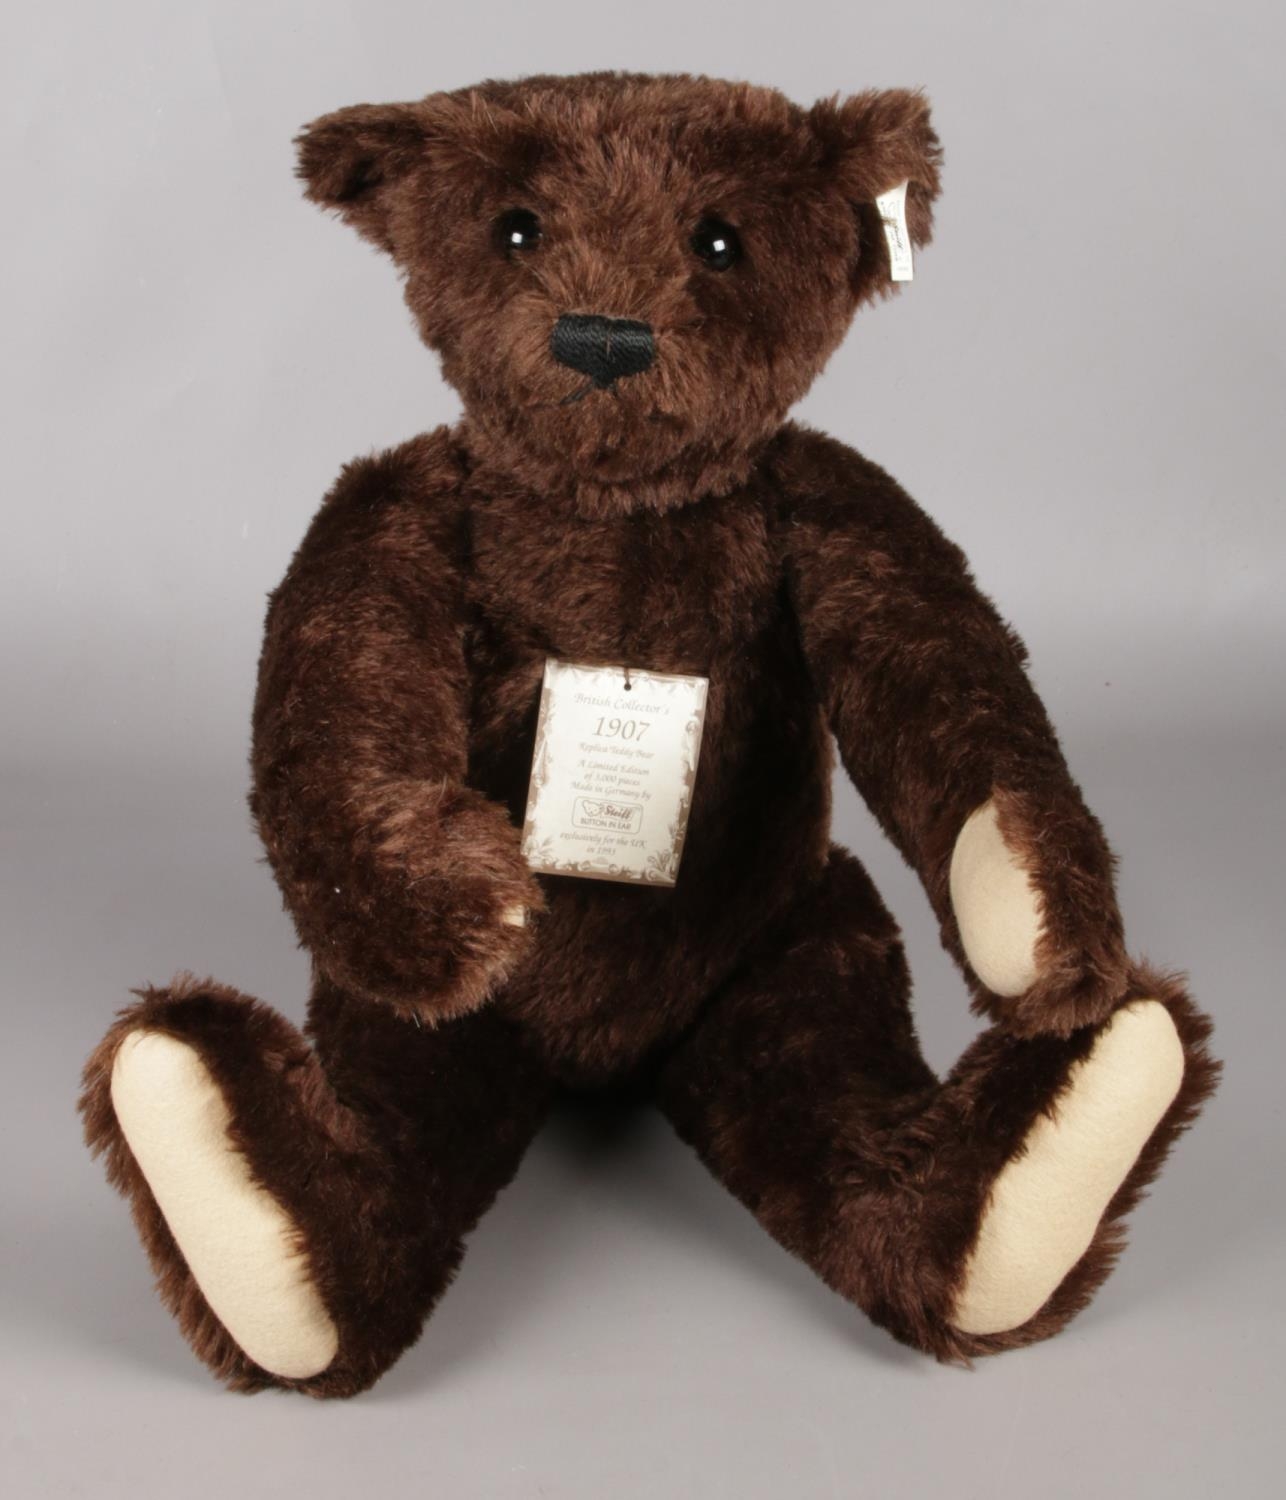 A Steiff 1907 replica limited edition teddy bear, 1734/3000 worldwide, produced 1992 with button